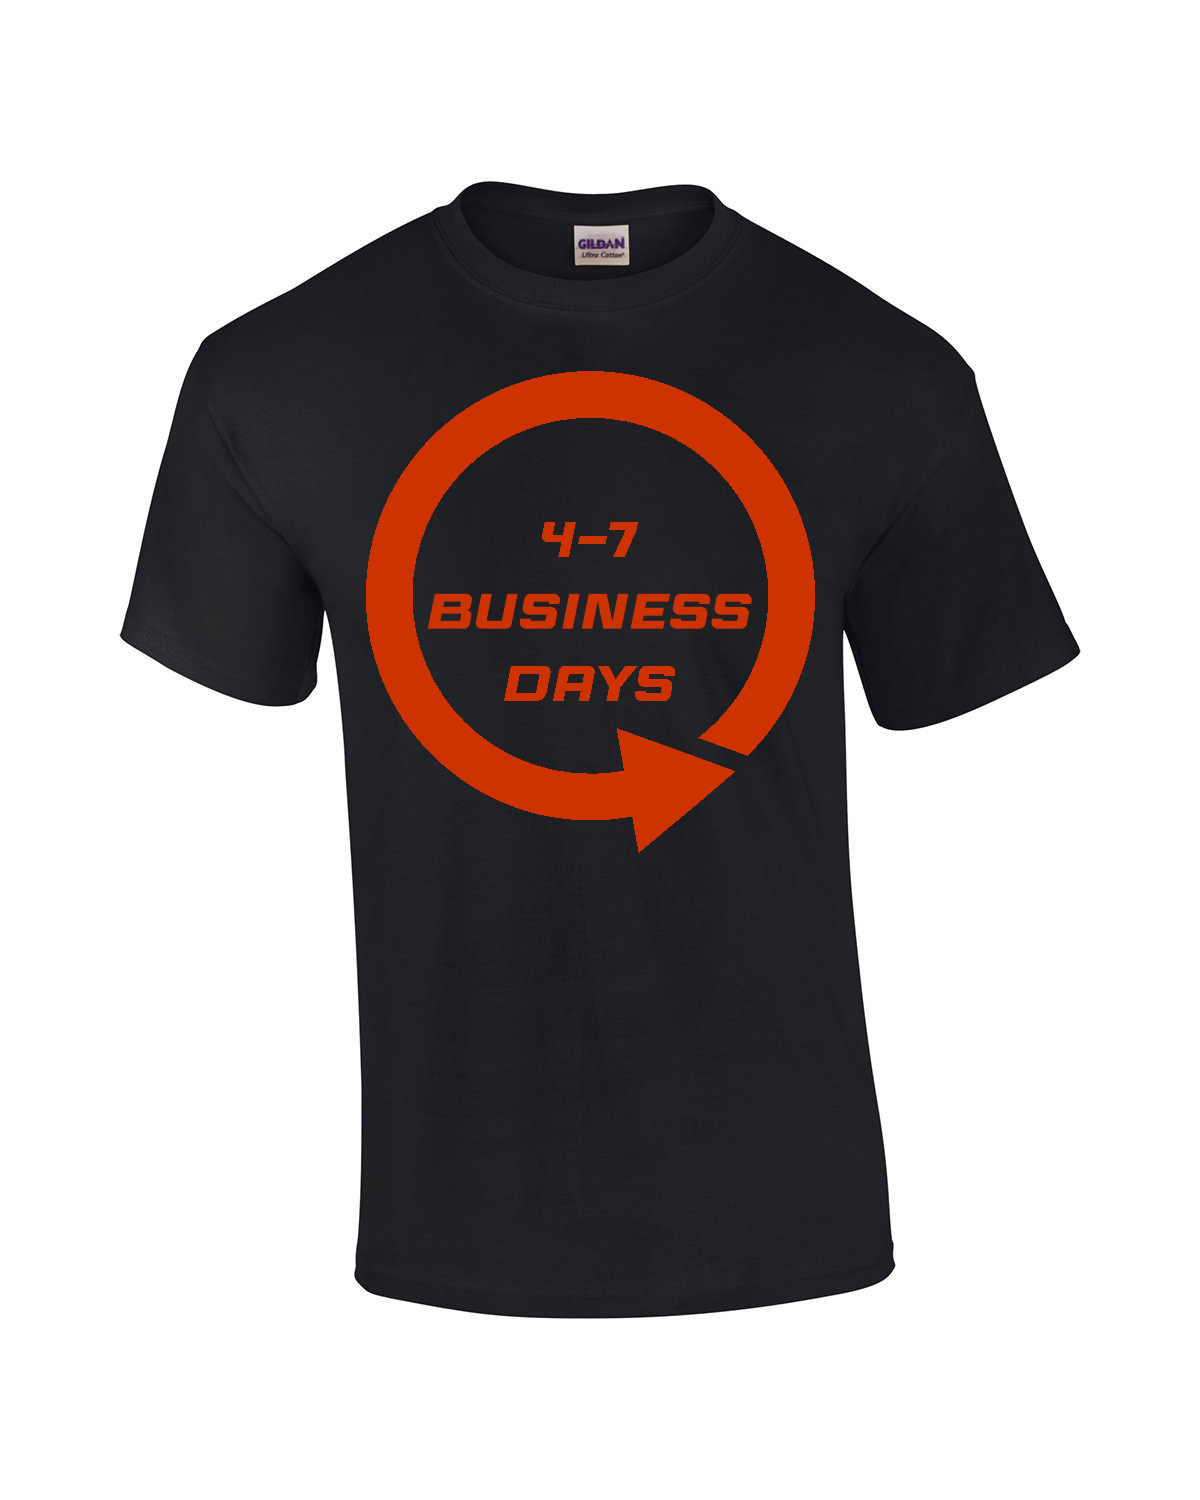 4-7 Business Days Turnaround